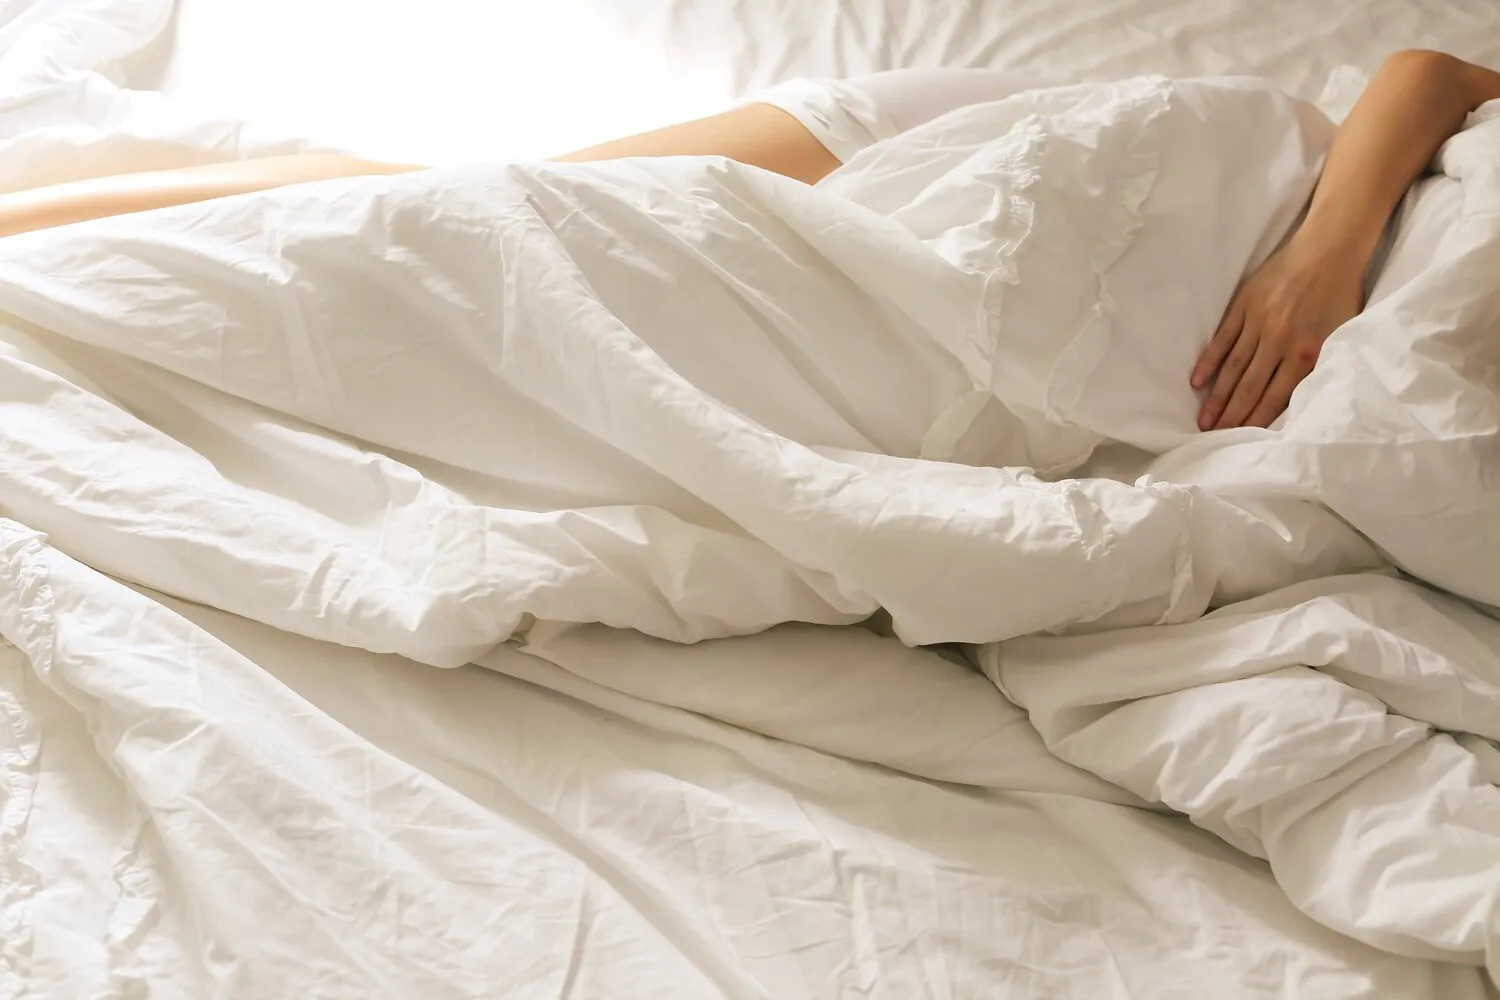 15 Natural Ways to Get Better Sleep